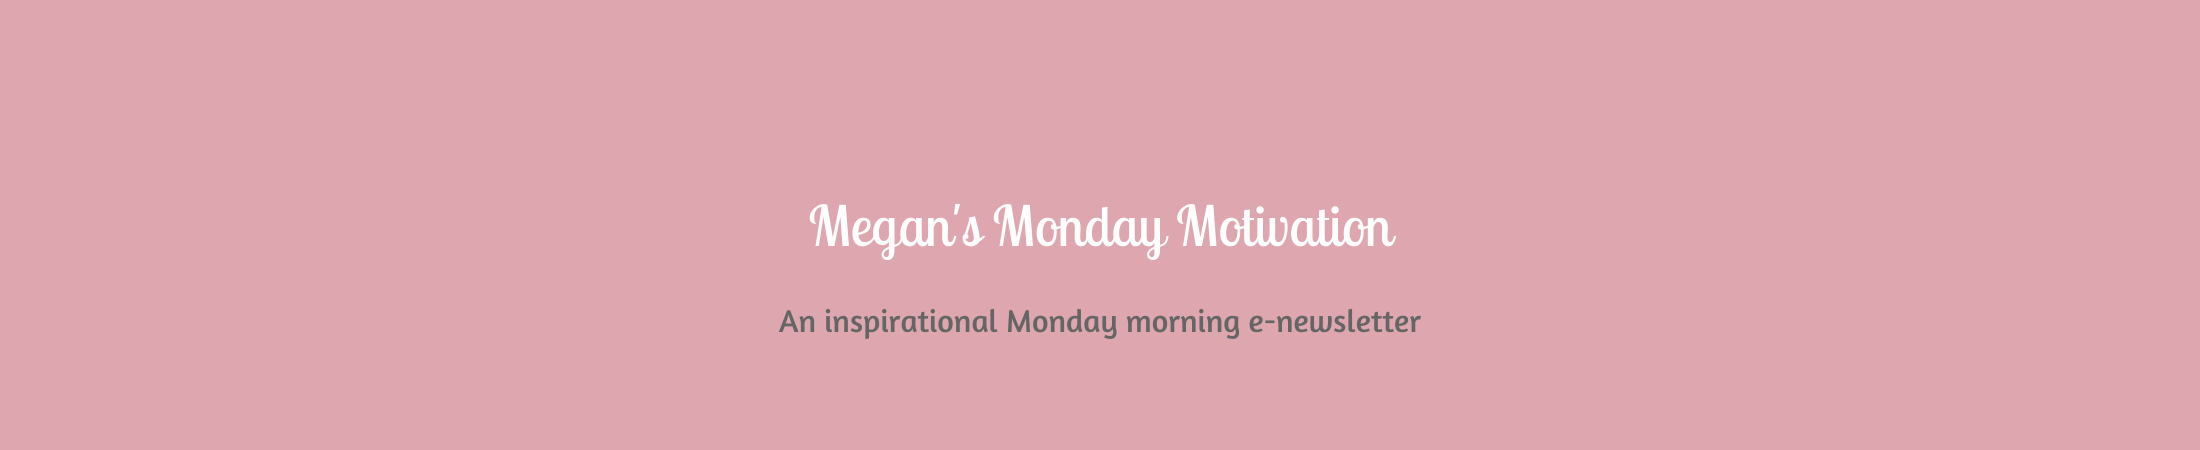 Megan's Monday Motivation